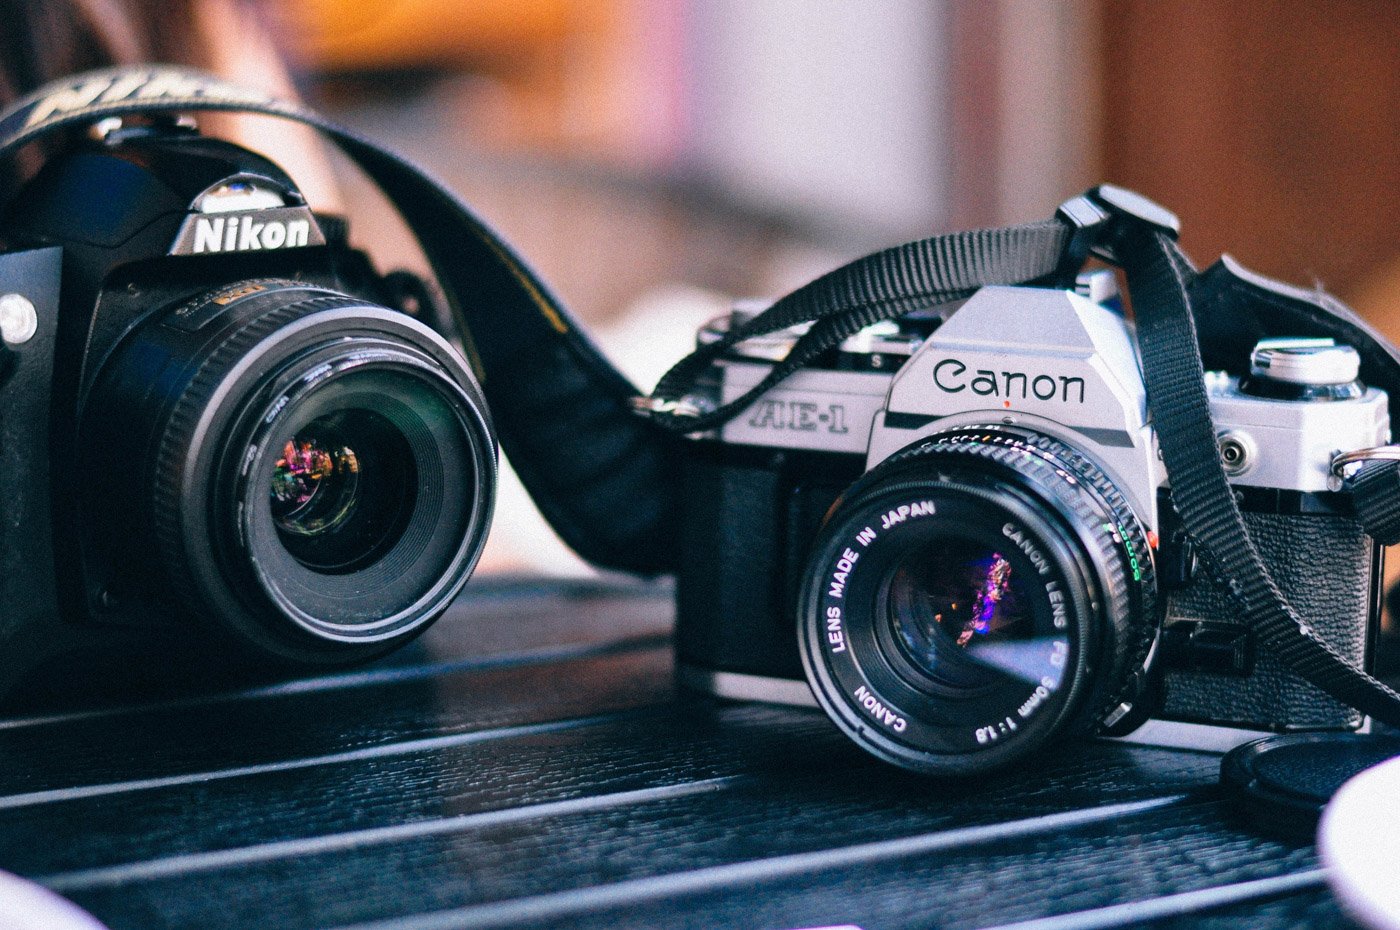 Nikon DSLR Cameras for Photography & Video